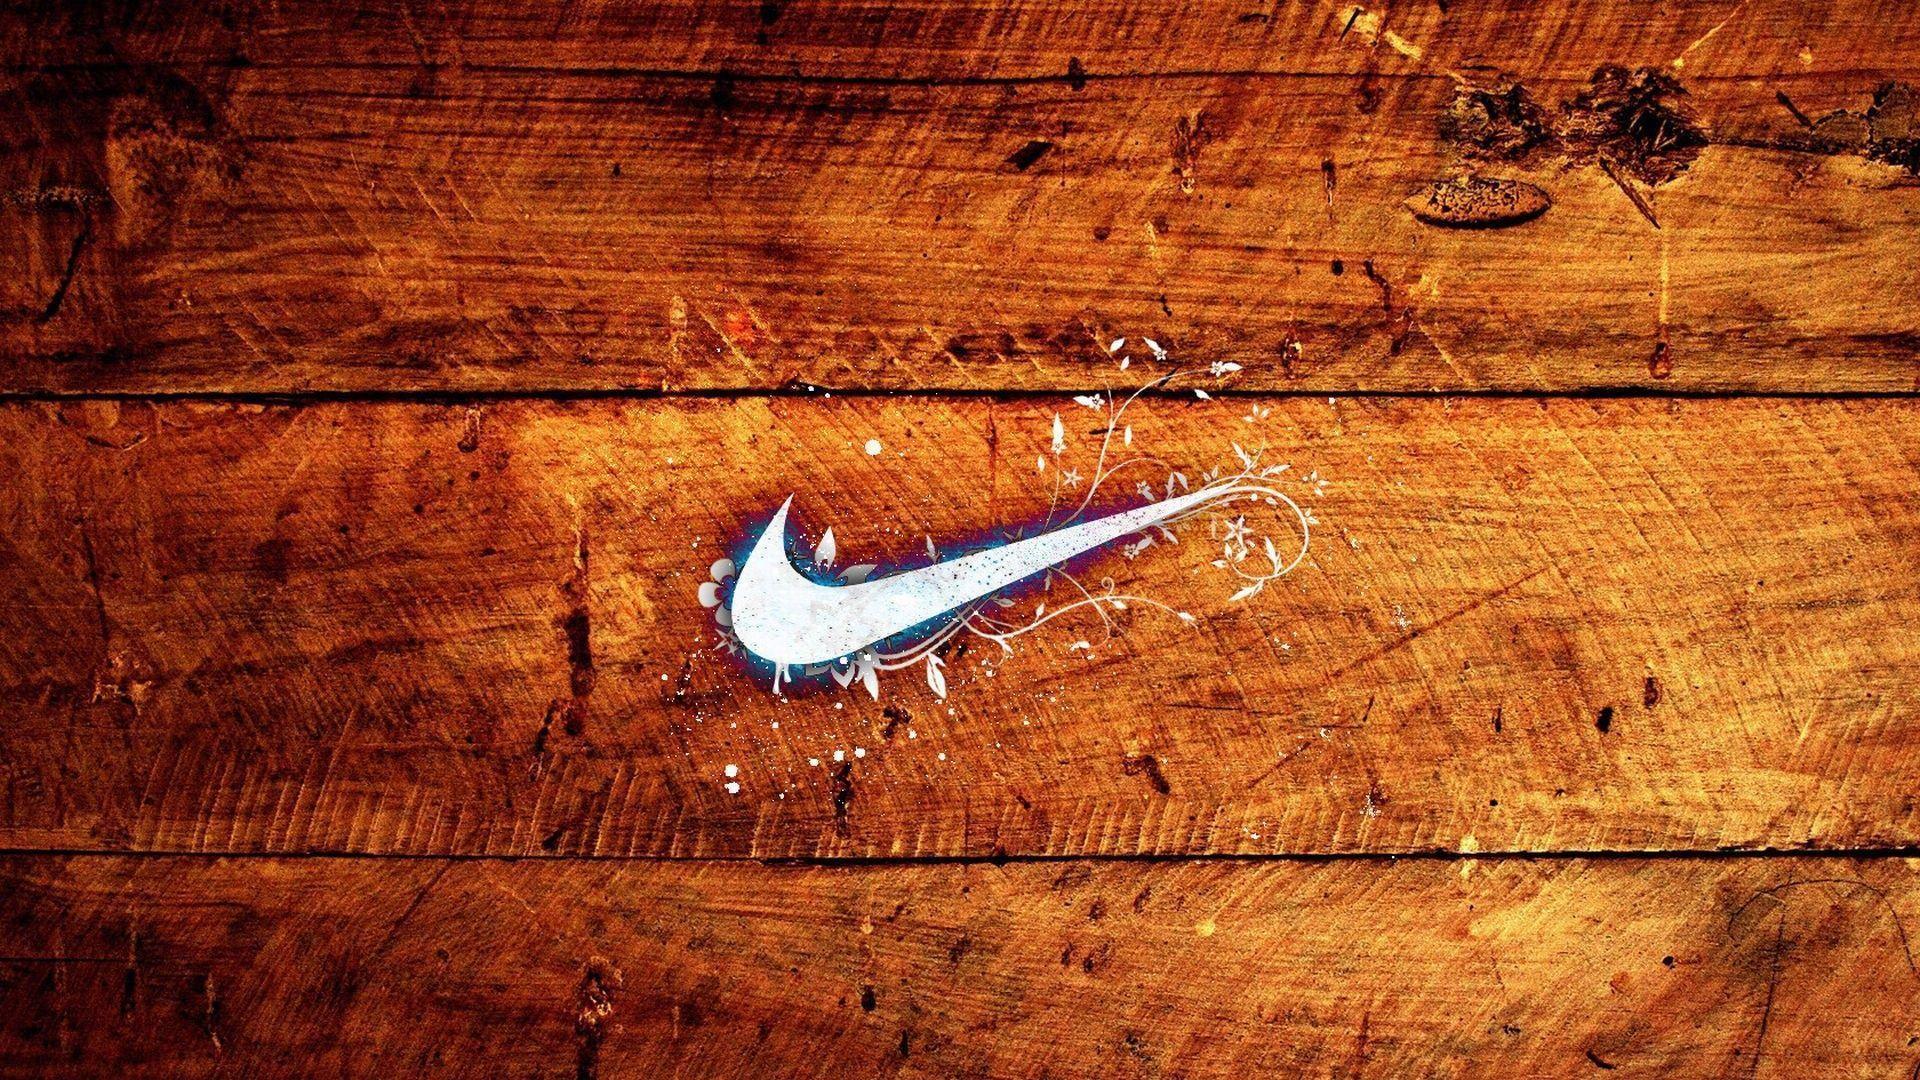 Cool Nike Wallpaper HD. Wallpaper, Background, Image, Art Photo